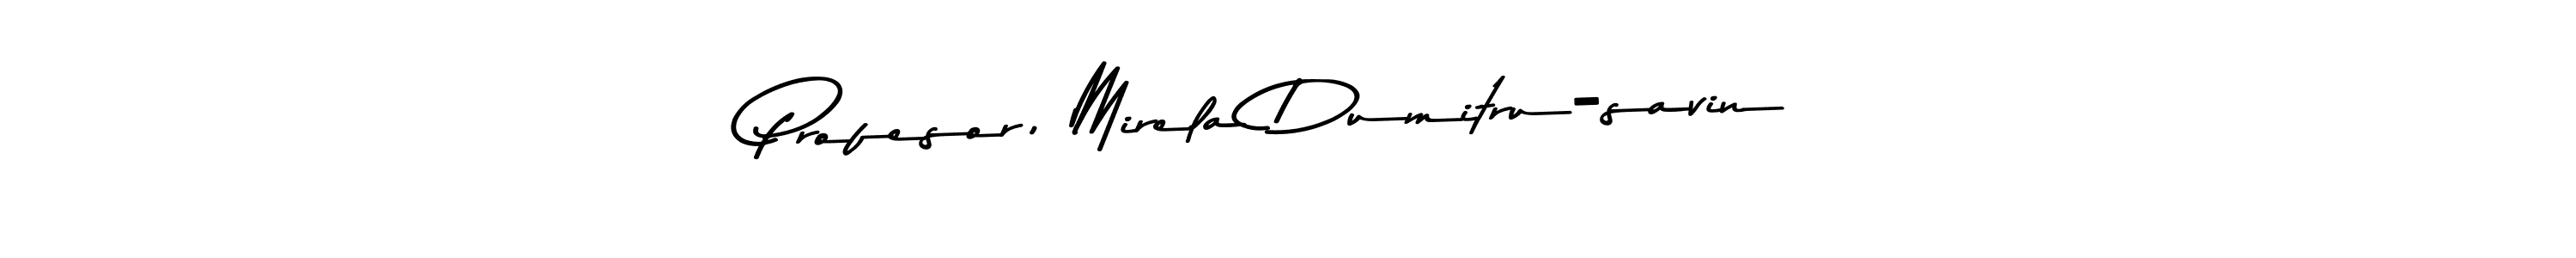 How to make Profesor, Mirela Dumitru-savin signature? Asem Kandis PERSONAL USE is a professional autograph style. Create handwritten signature for Profesor, Mirela Dumitru-savin name. Profesor, Mirela Dumitru-savin signature style 9 images and pictures png